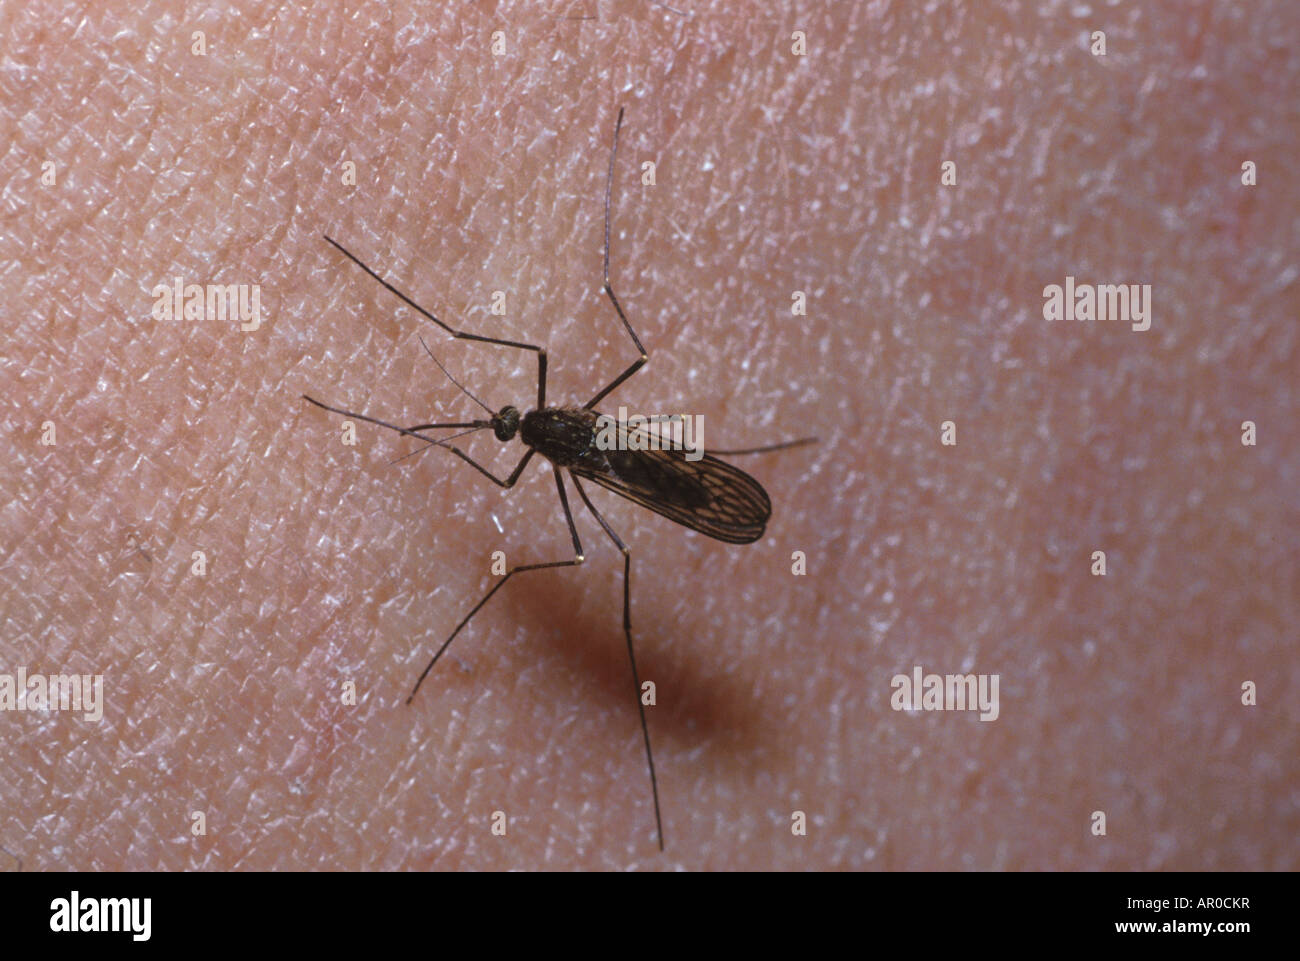 Alaskan Mosquito on Human Skin Alaska close-up Stock Photo